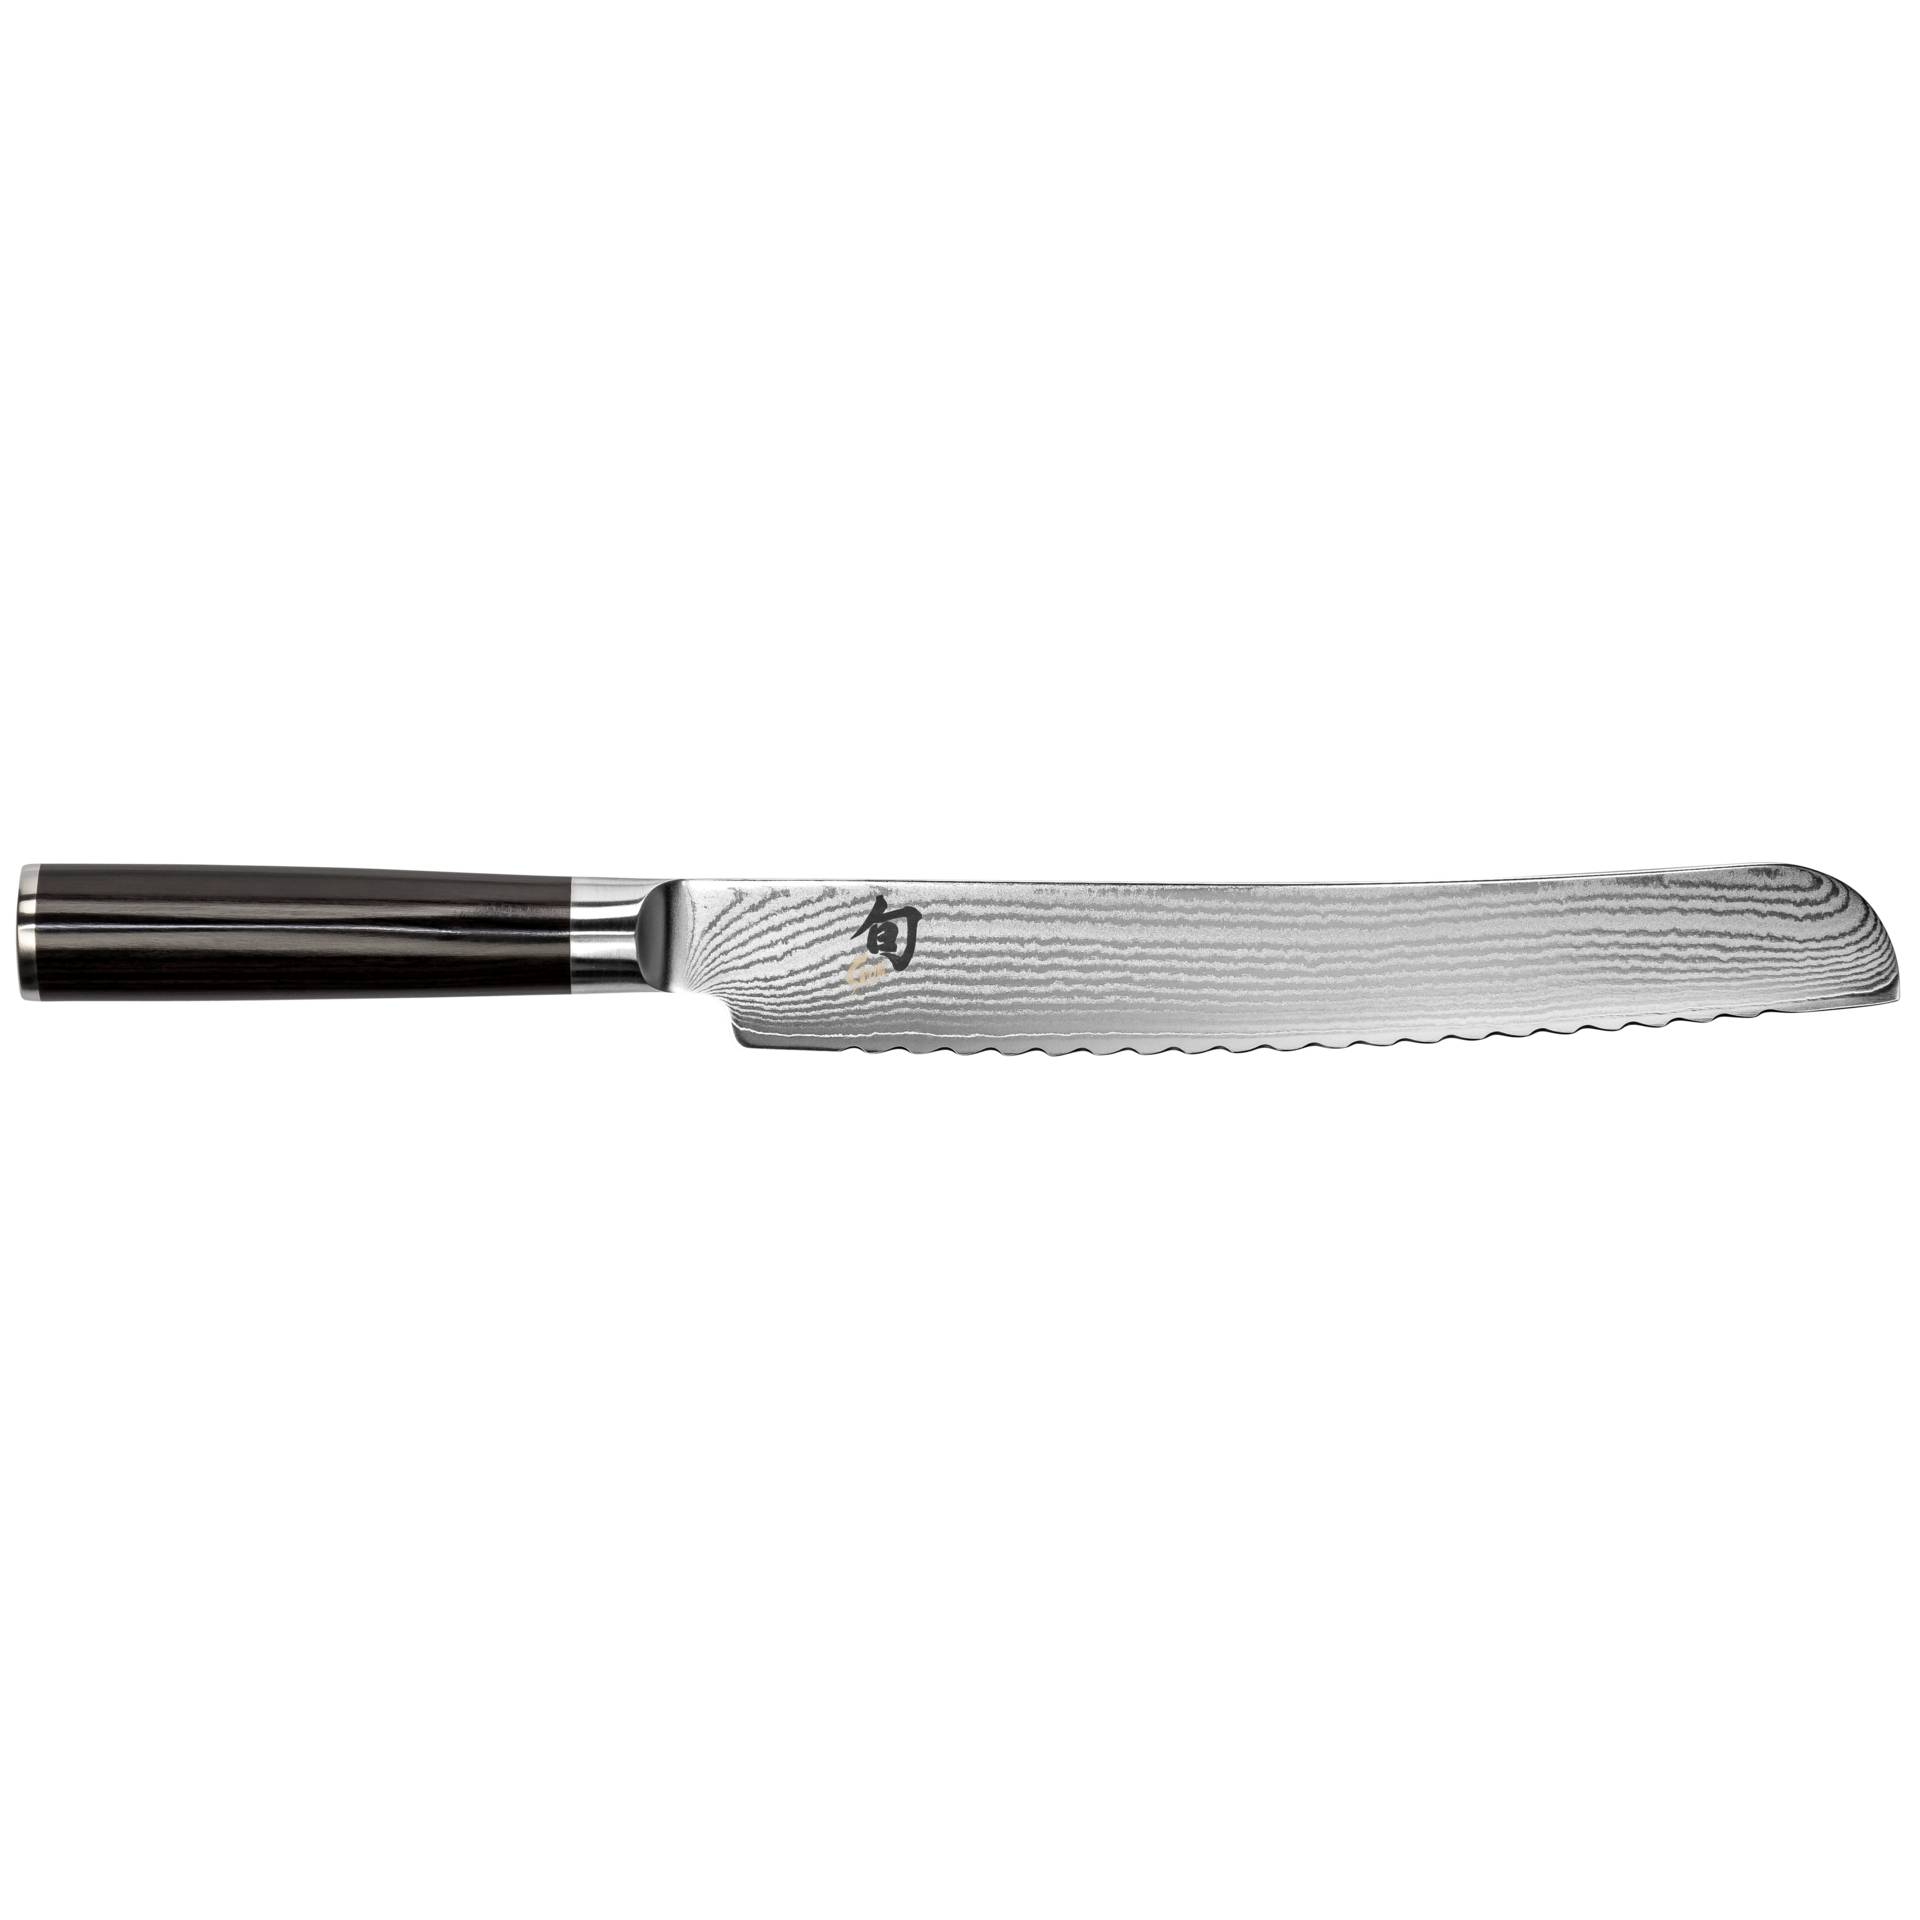 KAI Shun coltello da pane, 23 cm